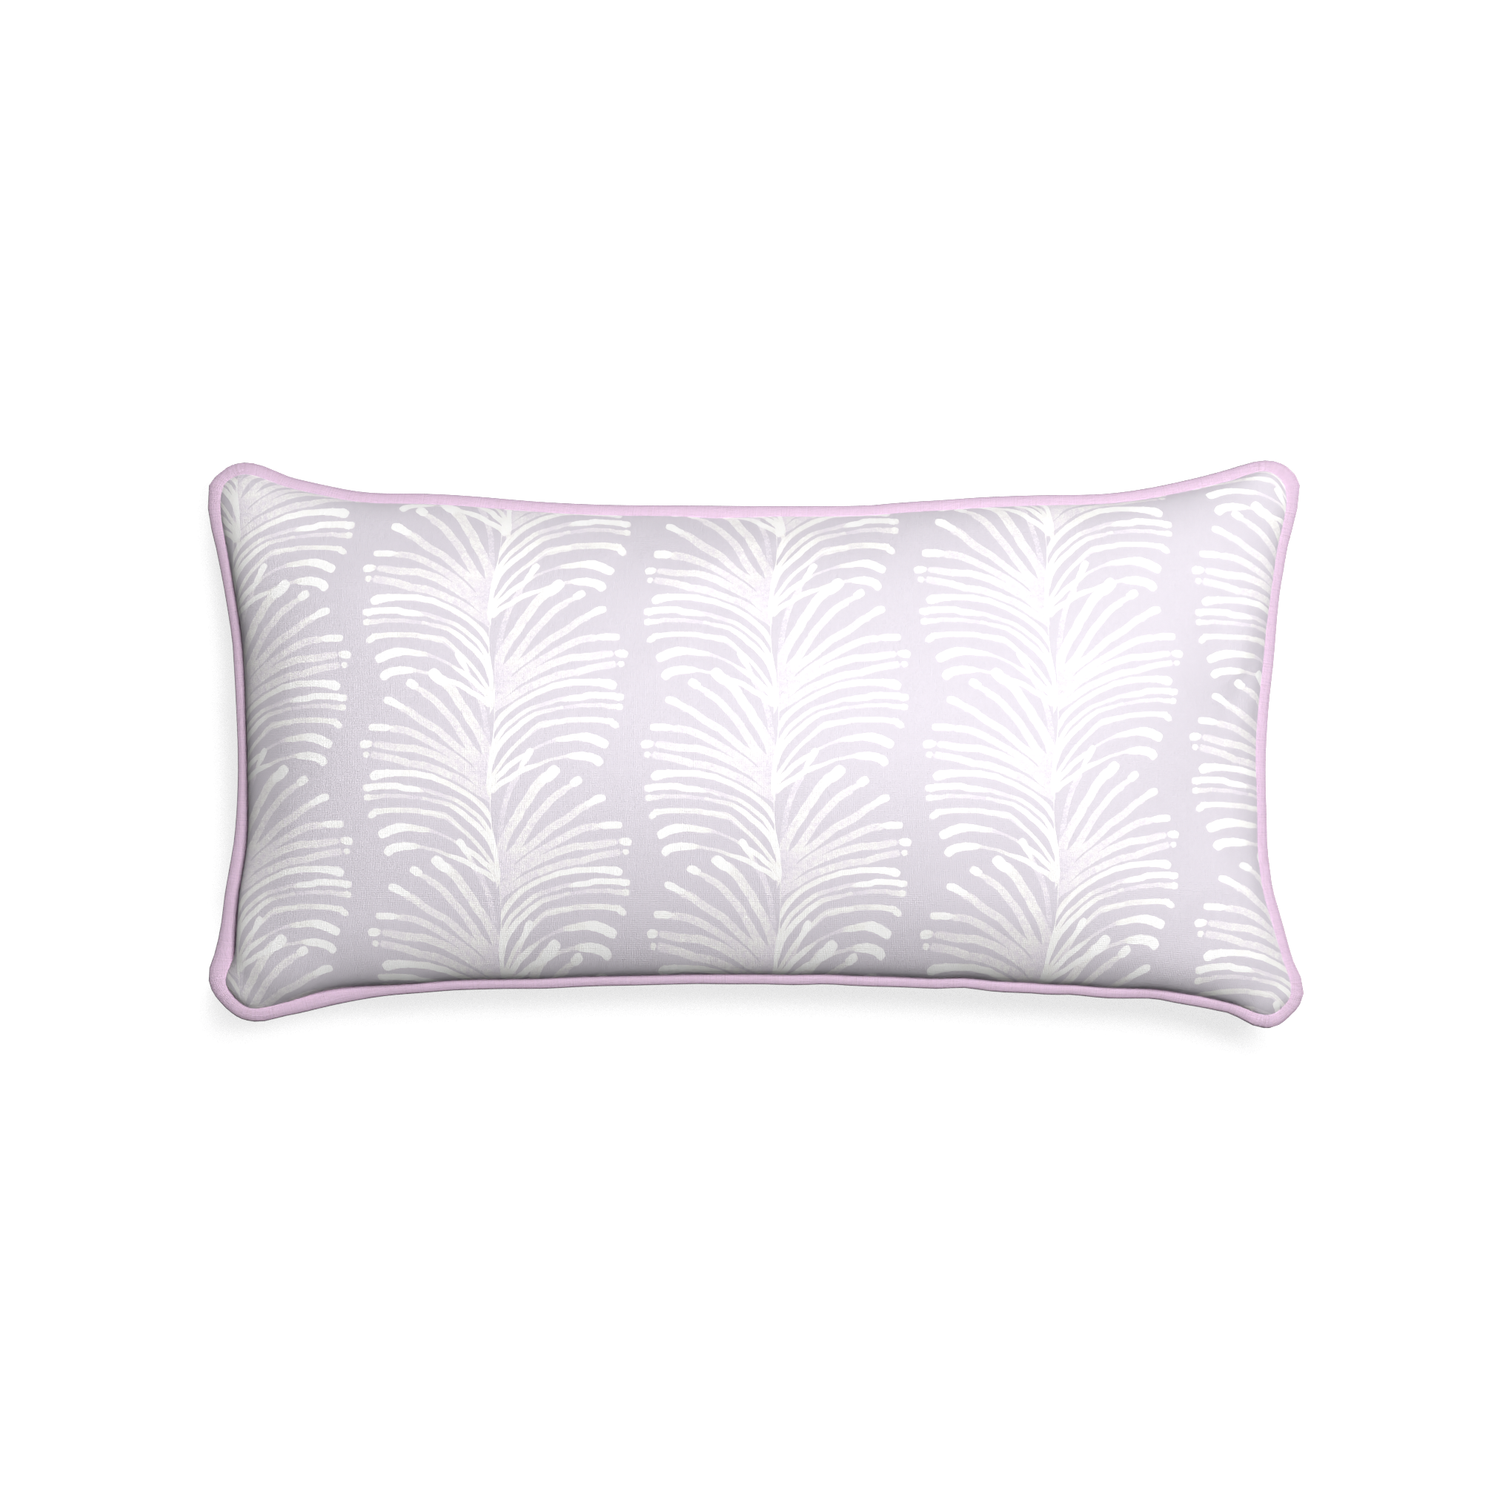 Midi-lumbar emma lavender custom lavender botanical stripepillow with l piping on white background